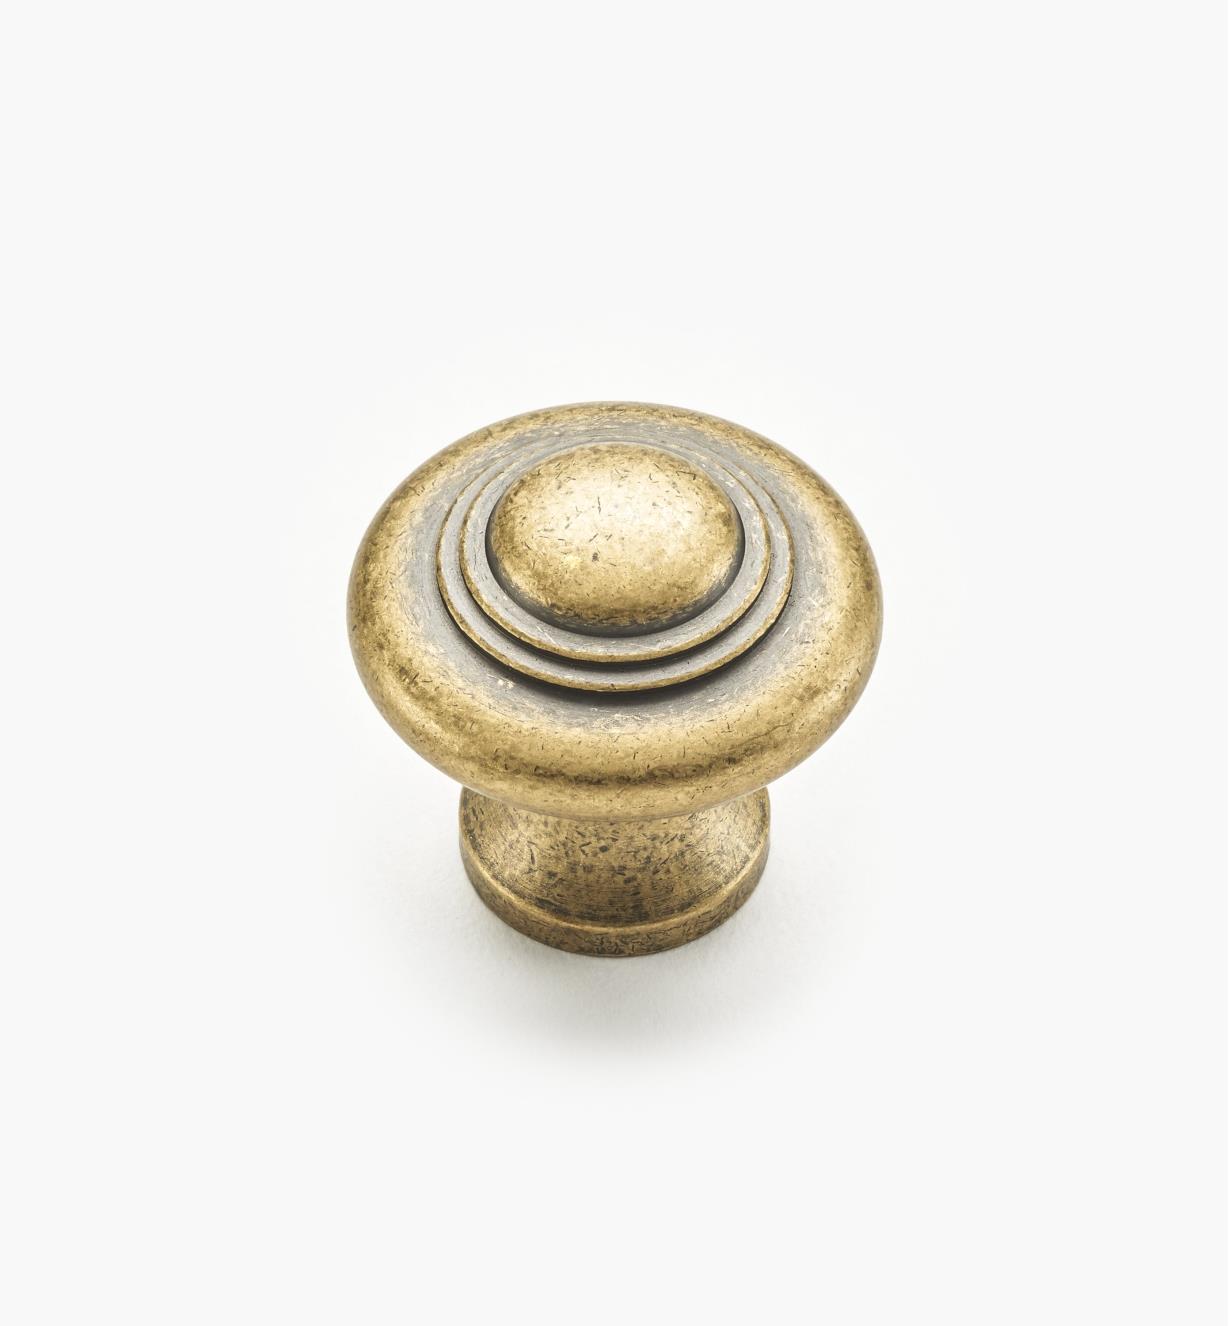 02W1242 - 1 5/16" x 1 1/4" Antique Brass Ring Knob